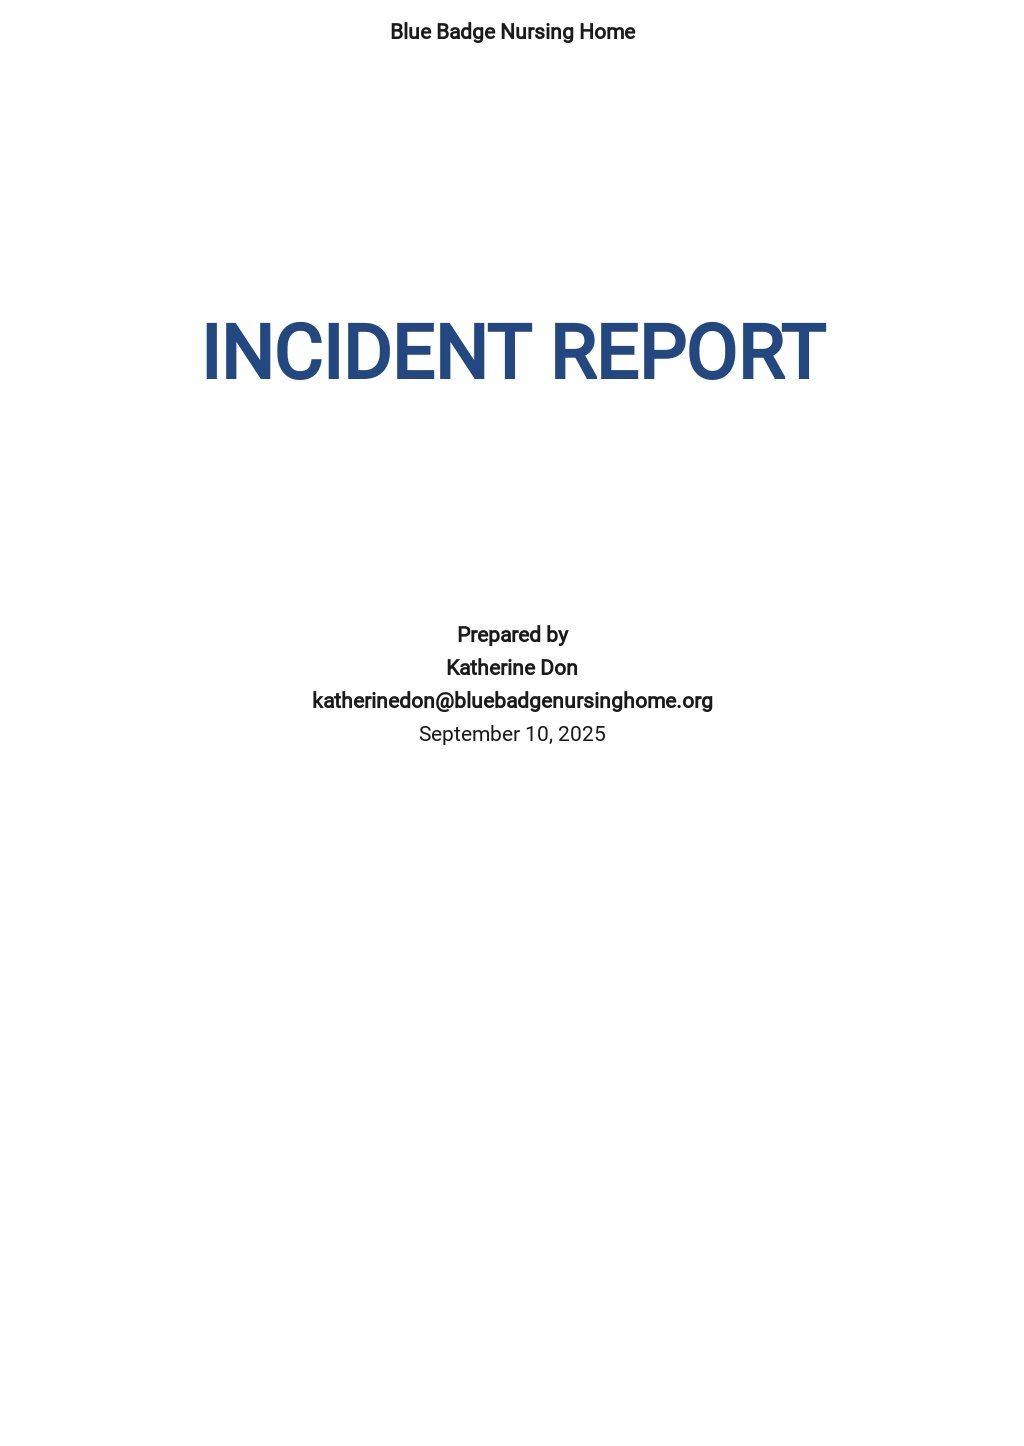 General Incident Report Template.jpe